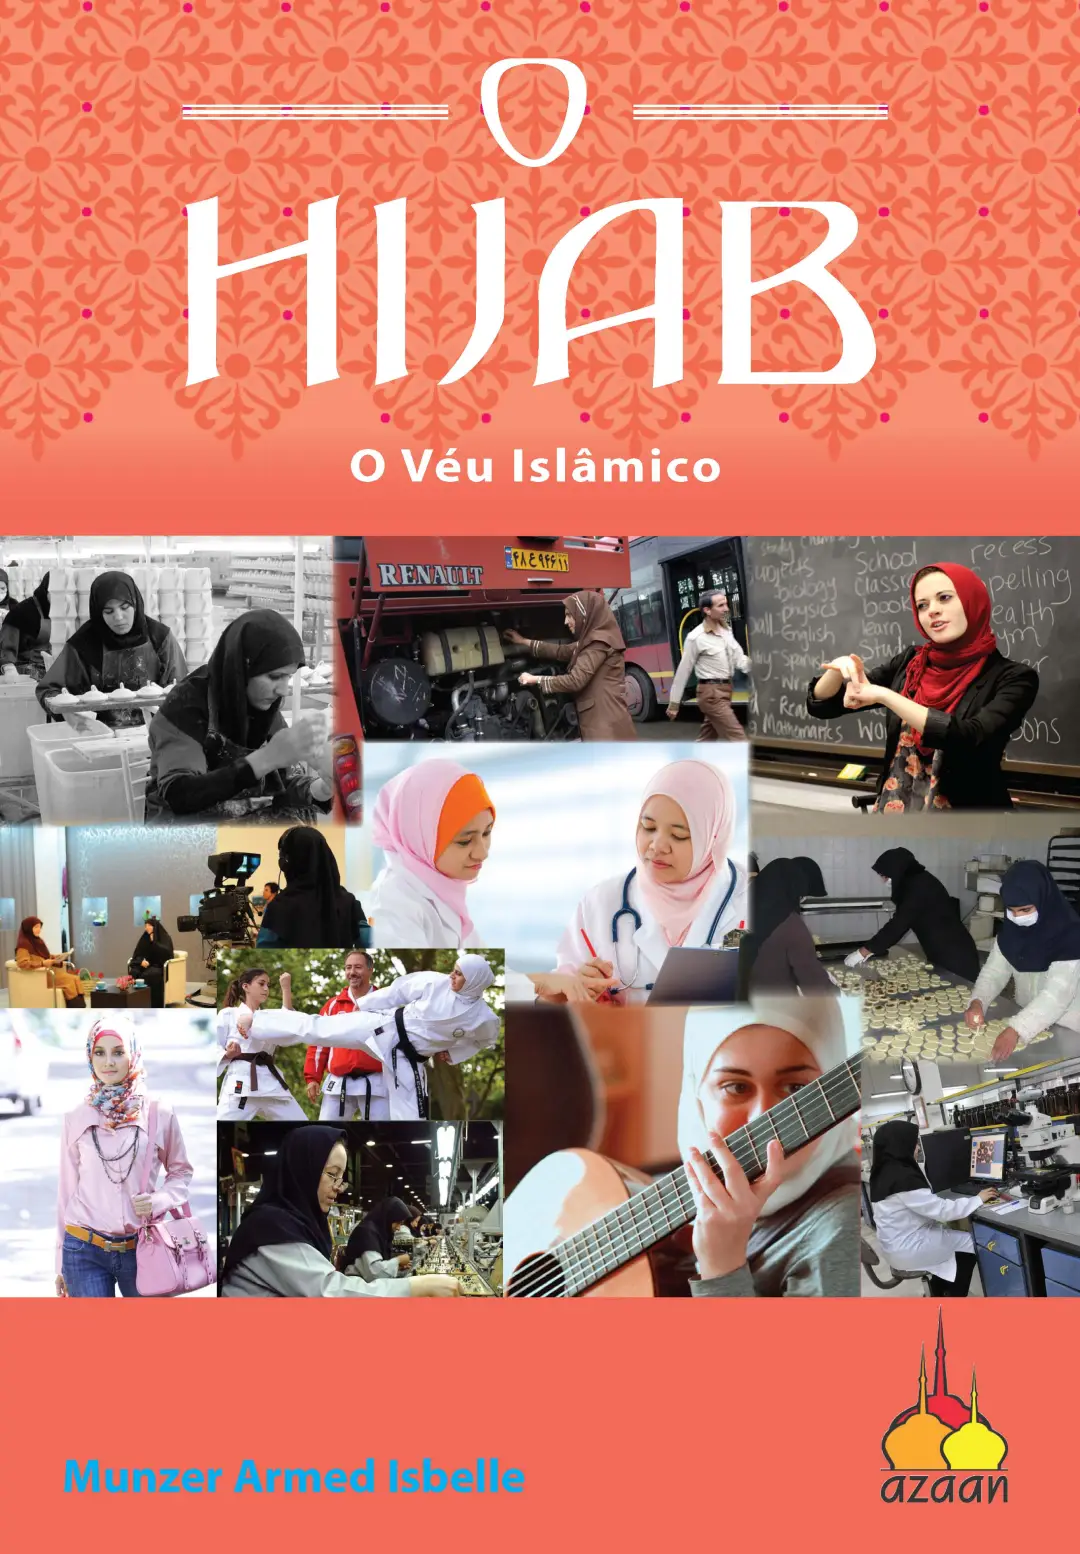 O Hijab